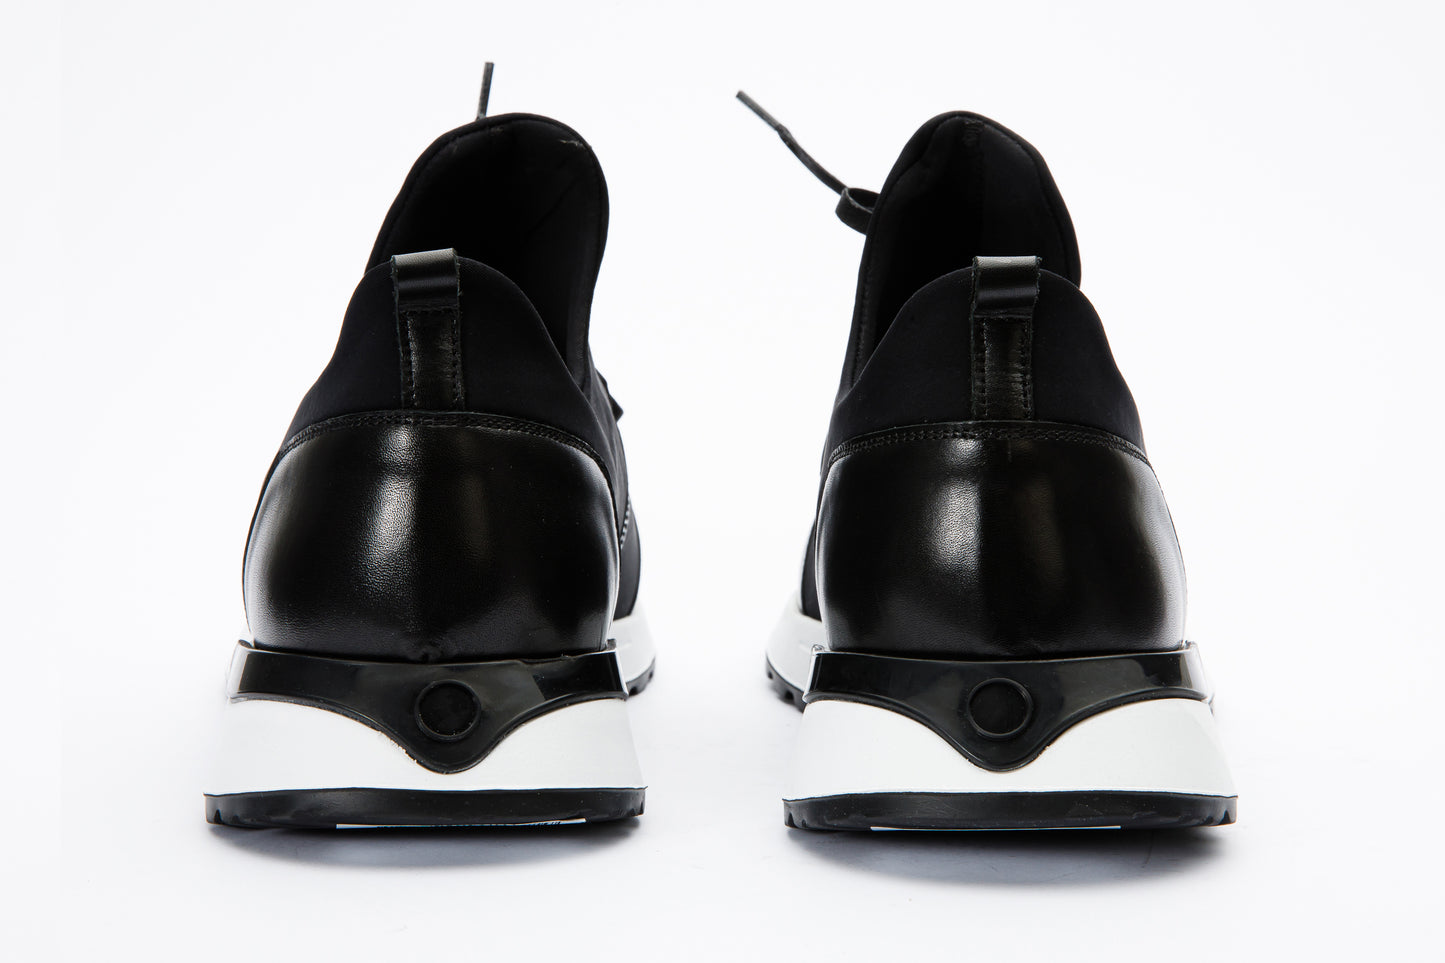 The Nebreska Black Leather Men Sneaker